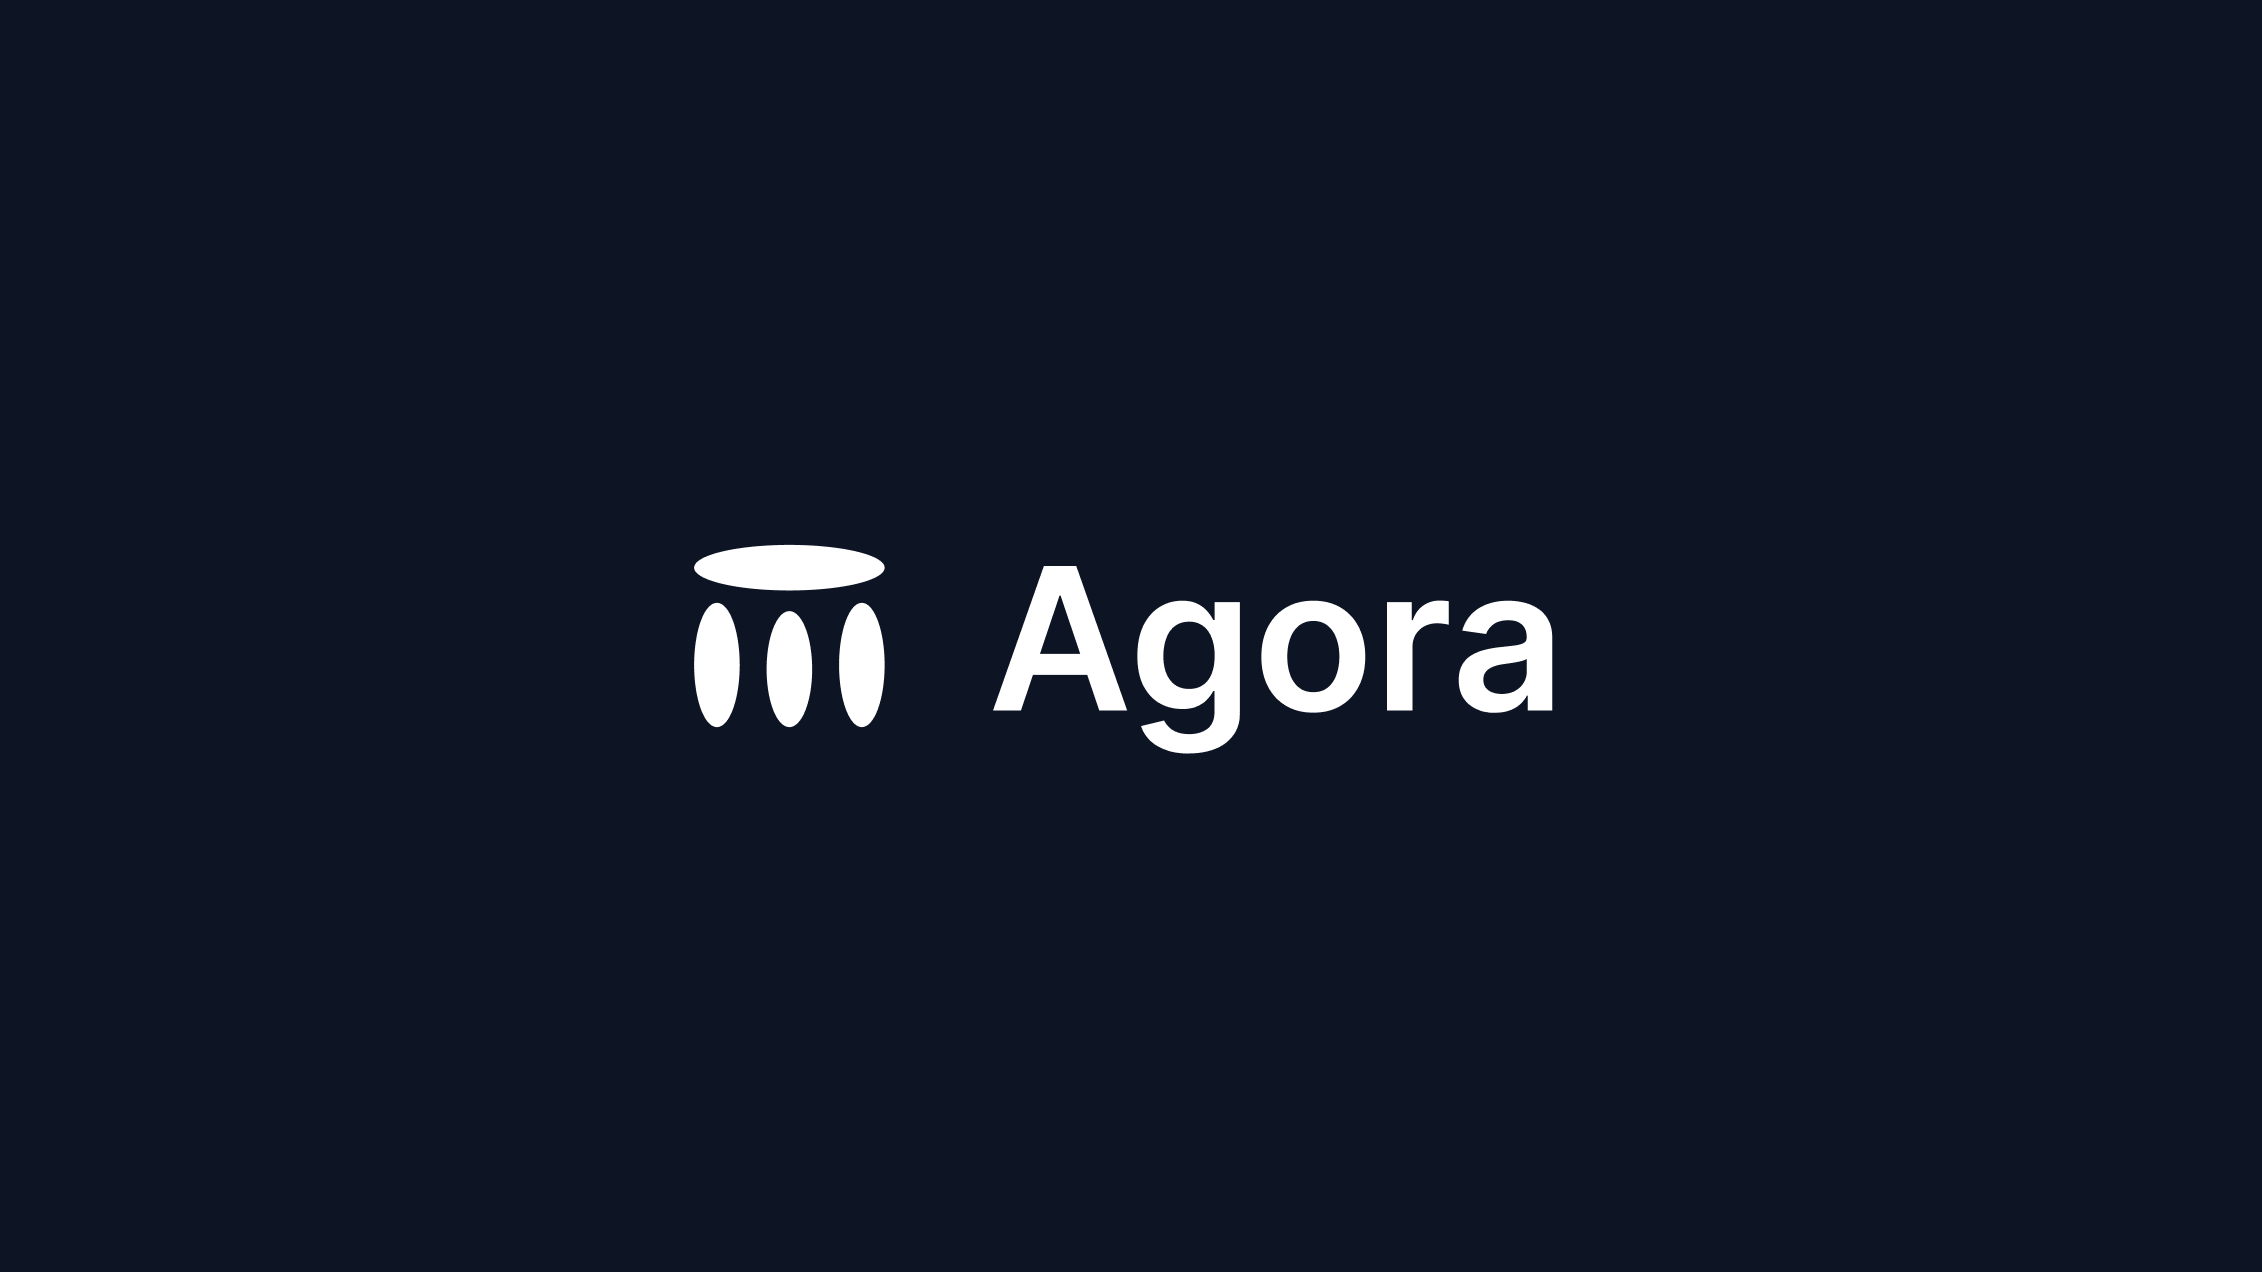 Agora uses Center to power best-in-class governance platform